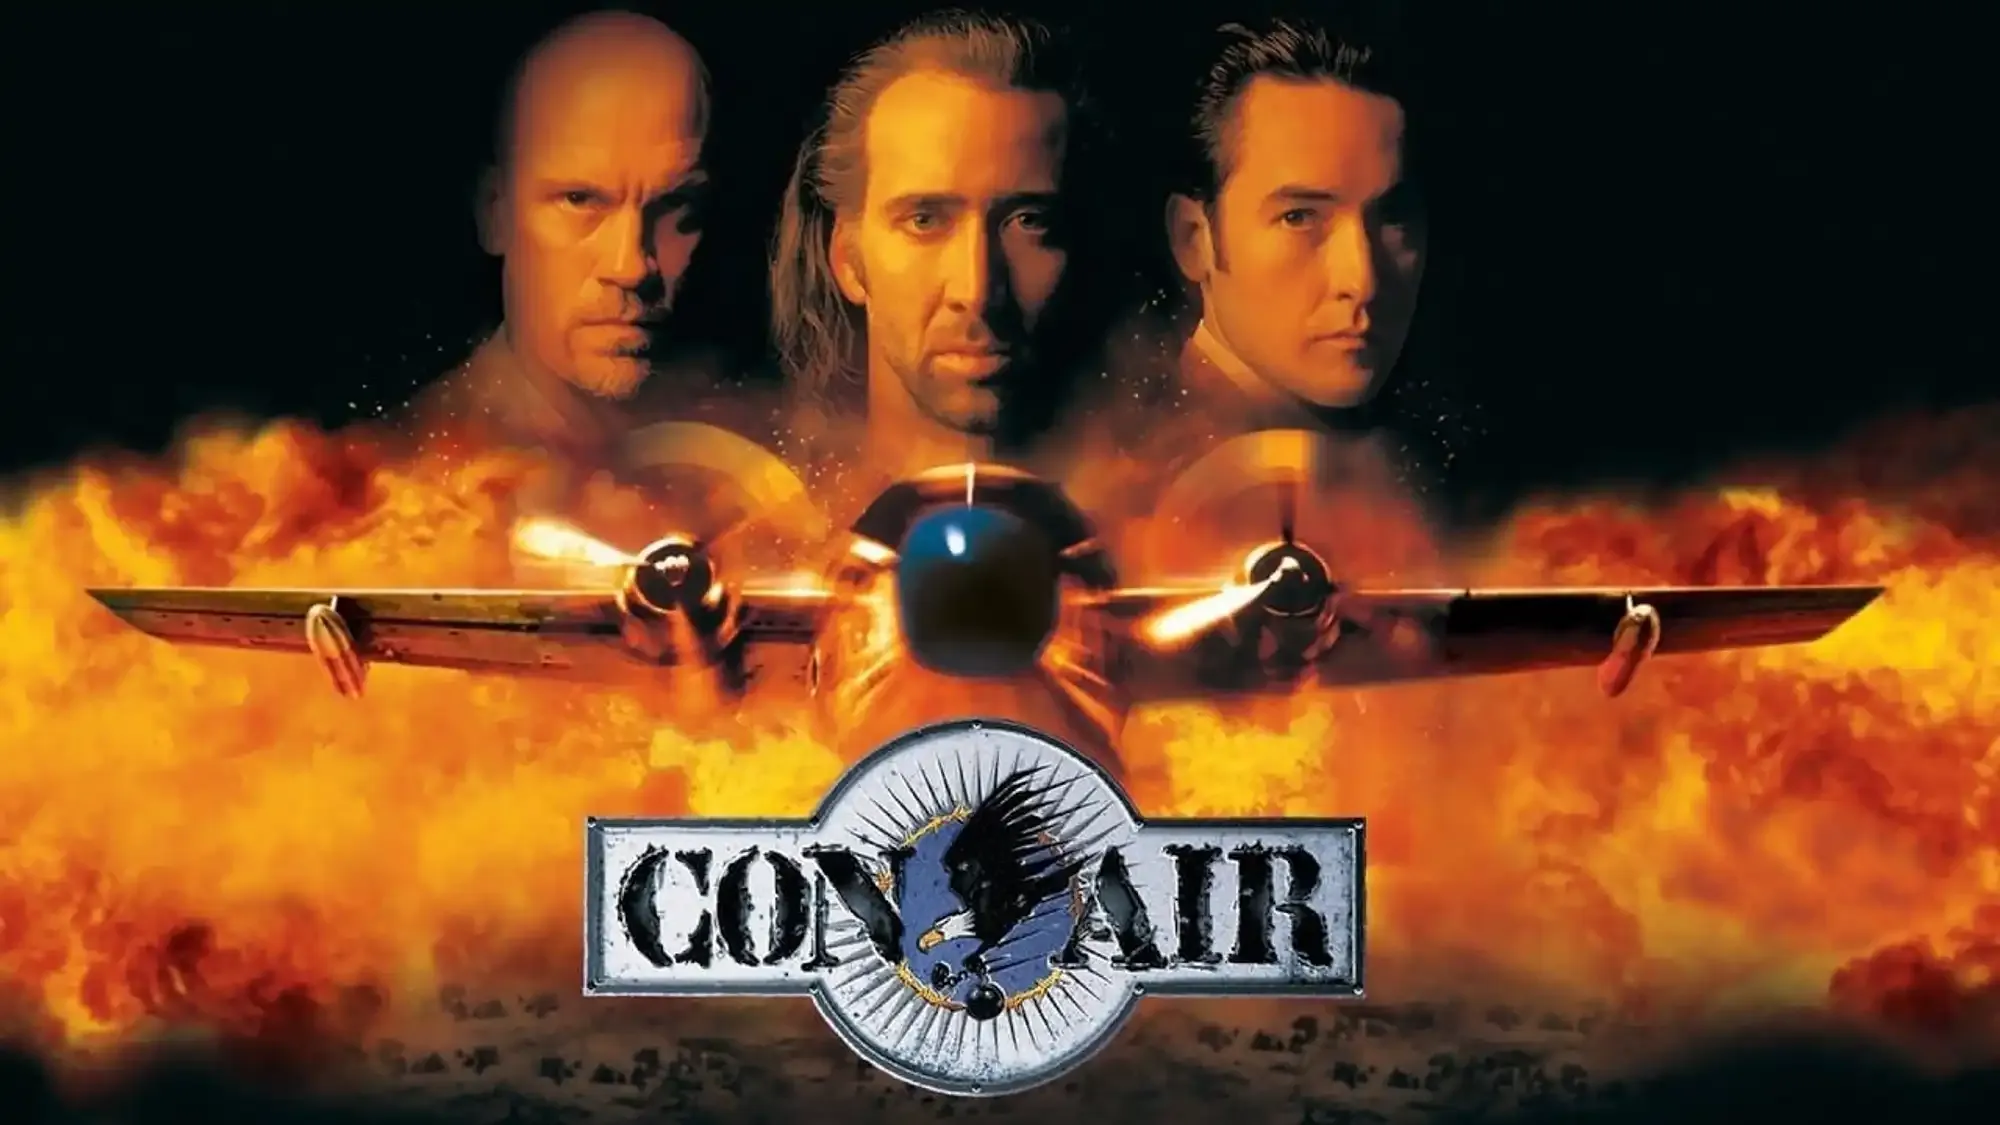 Con Air movie review